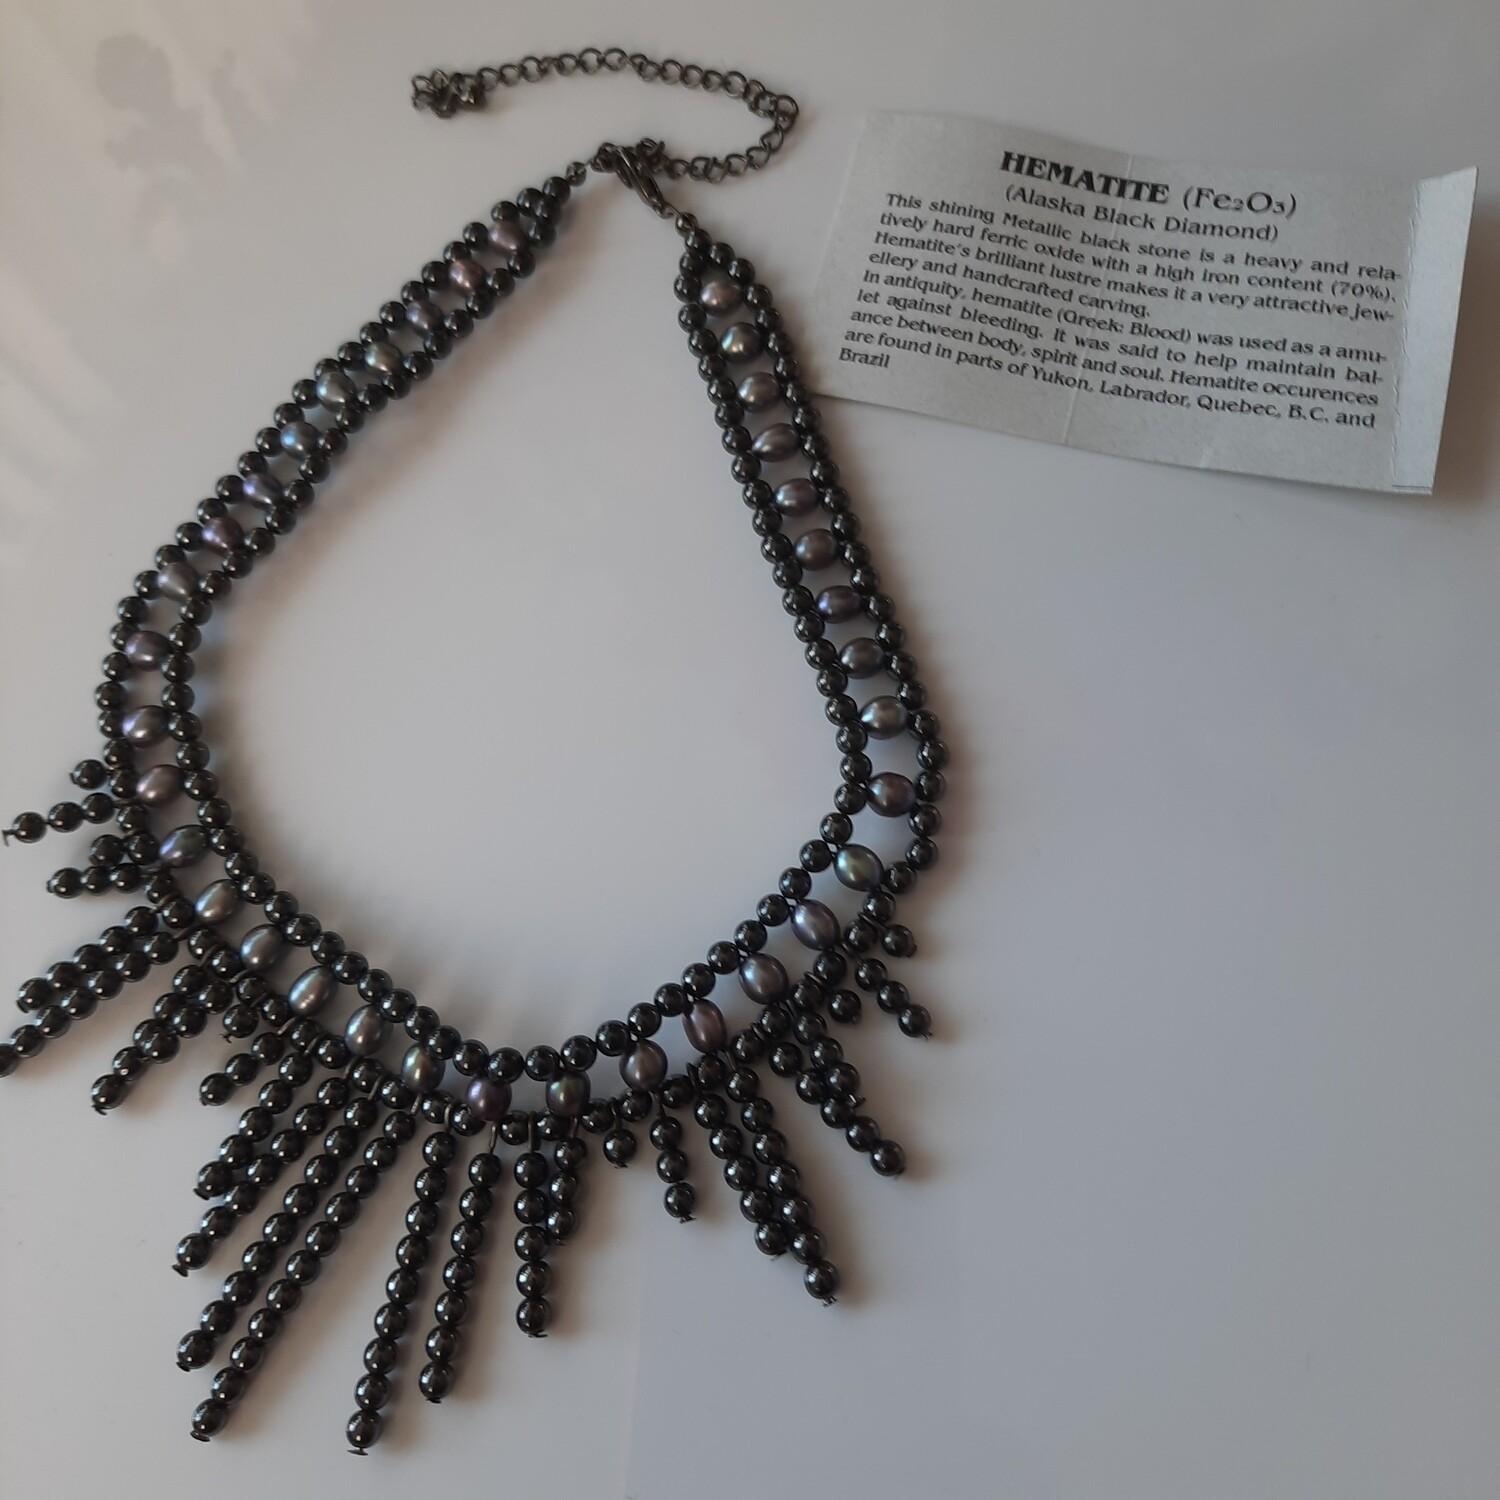 Pan Pacific's Hematite Necklace: The Alaska Black Diamond c. 1990's